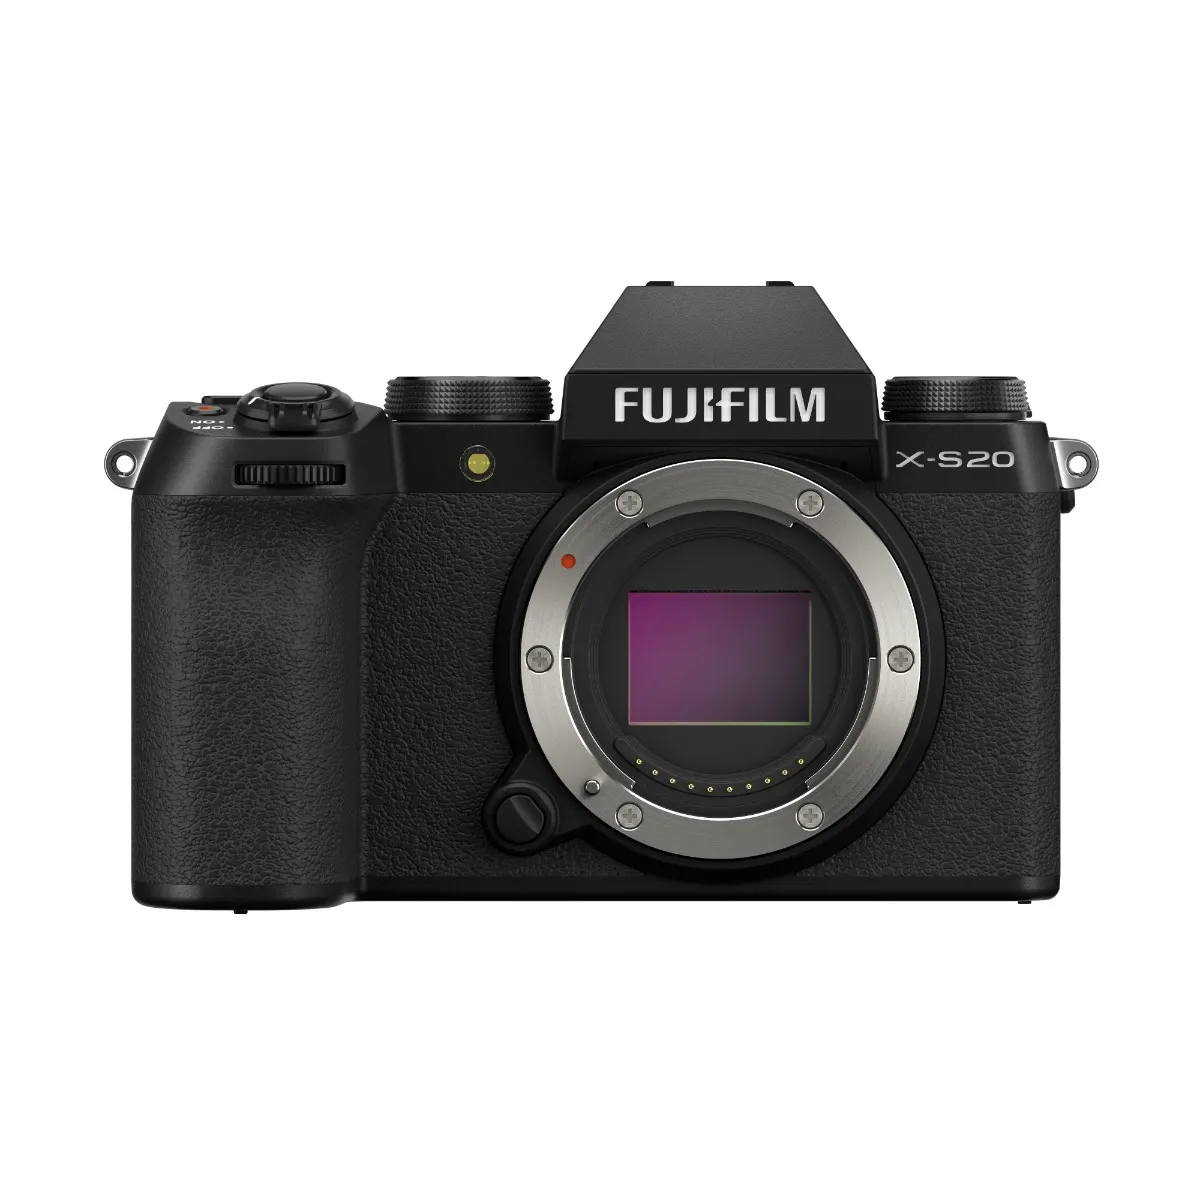 Image of Fujifilm X-s20